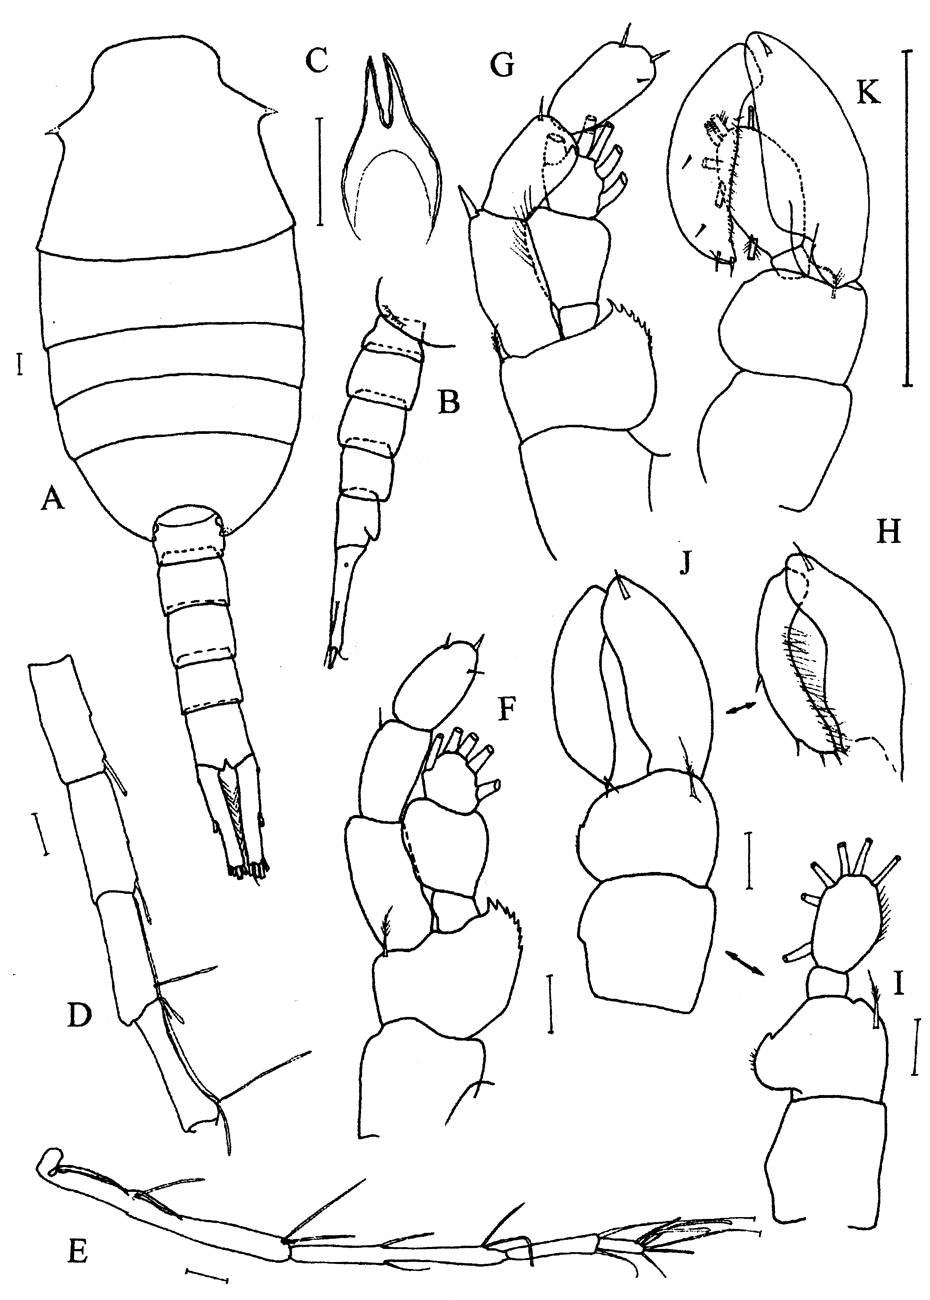 Species Lucicutia grandis - Plate 11 of morphological figures